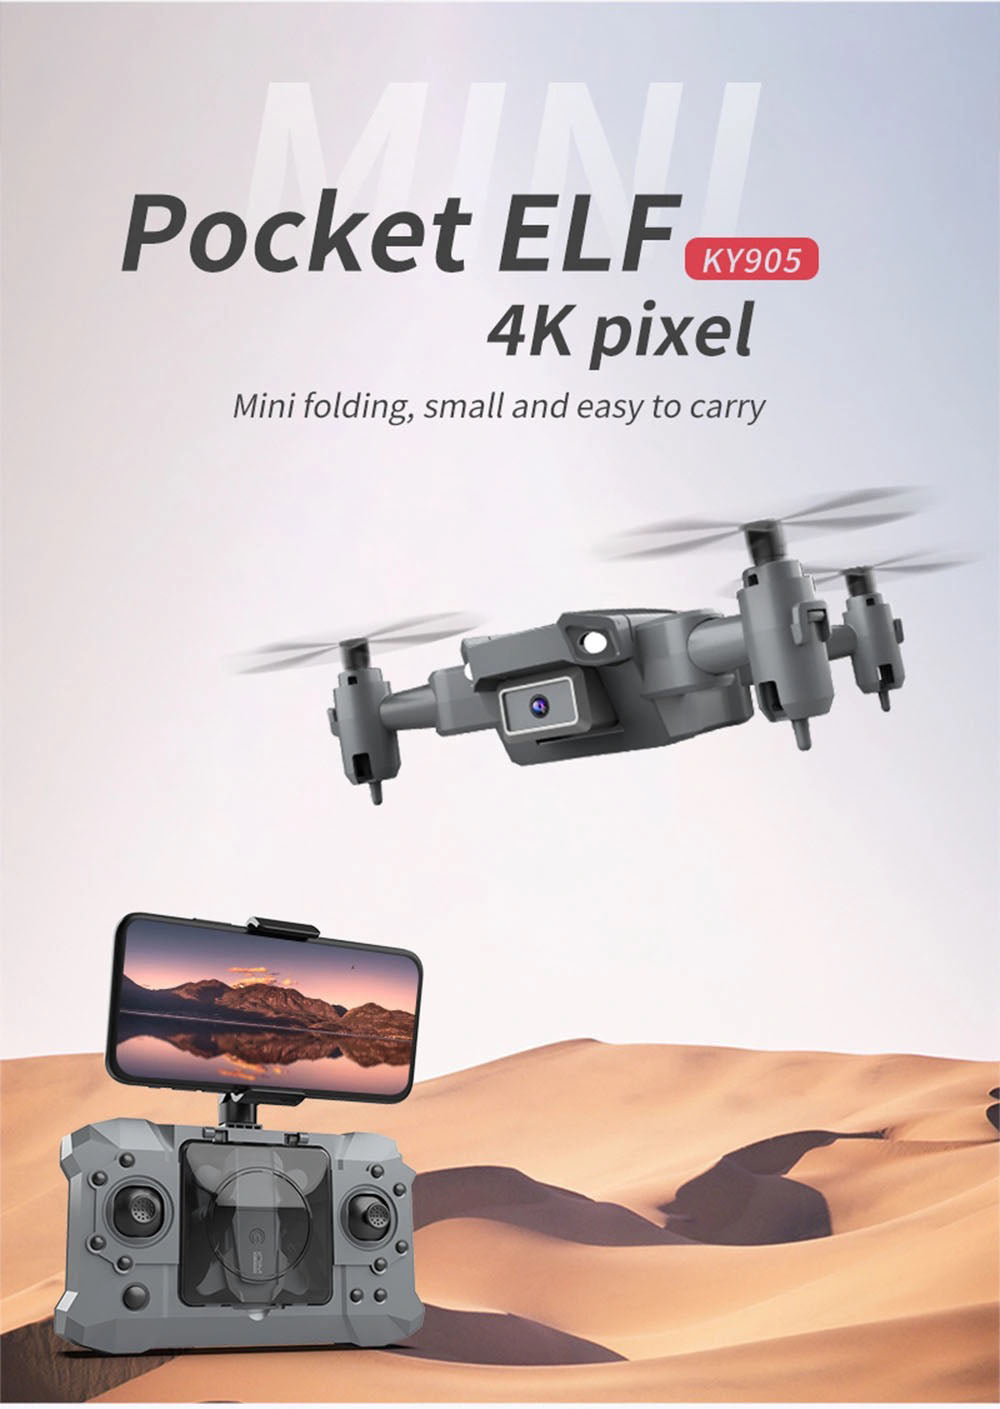 KY905 Mini Drone, pocket elf ky905 4k pixel mini folding,